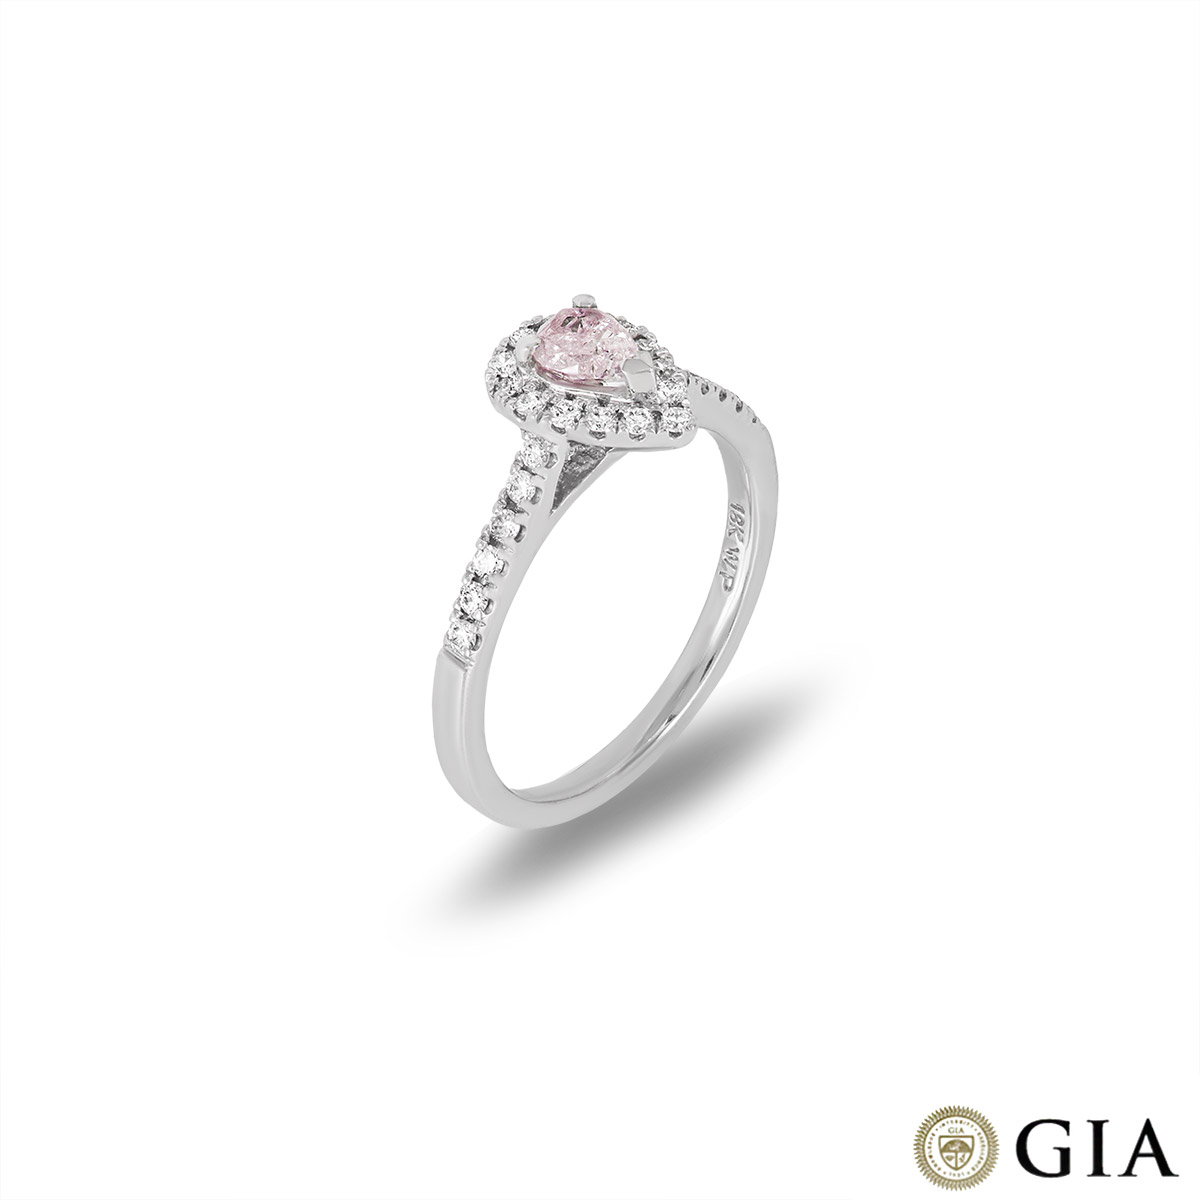 White Gold Fancy Light Purplish Pink Pear Cut Diamond Ring 0.31ct